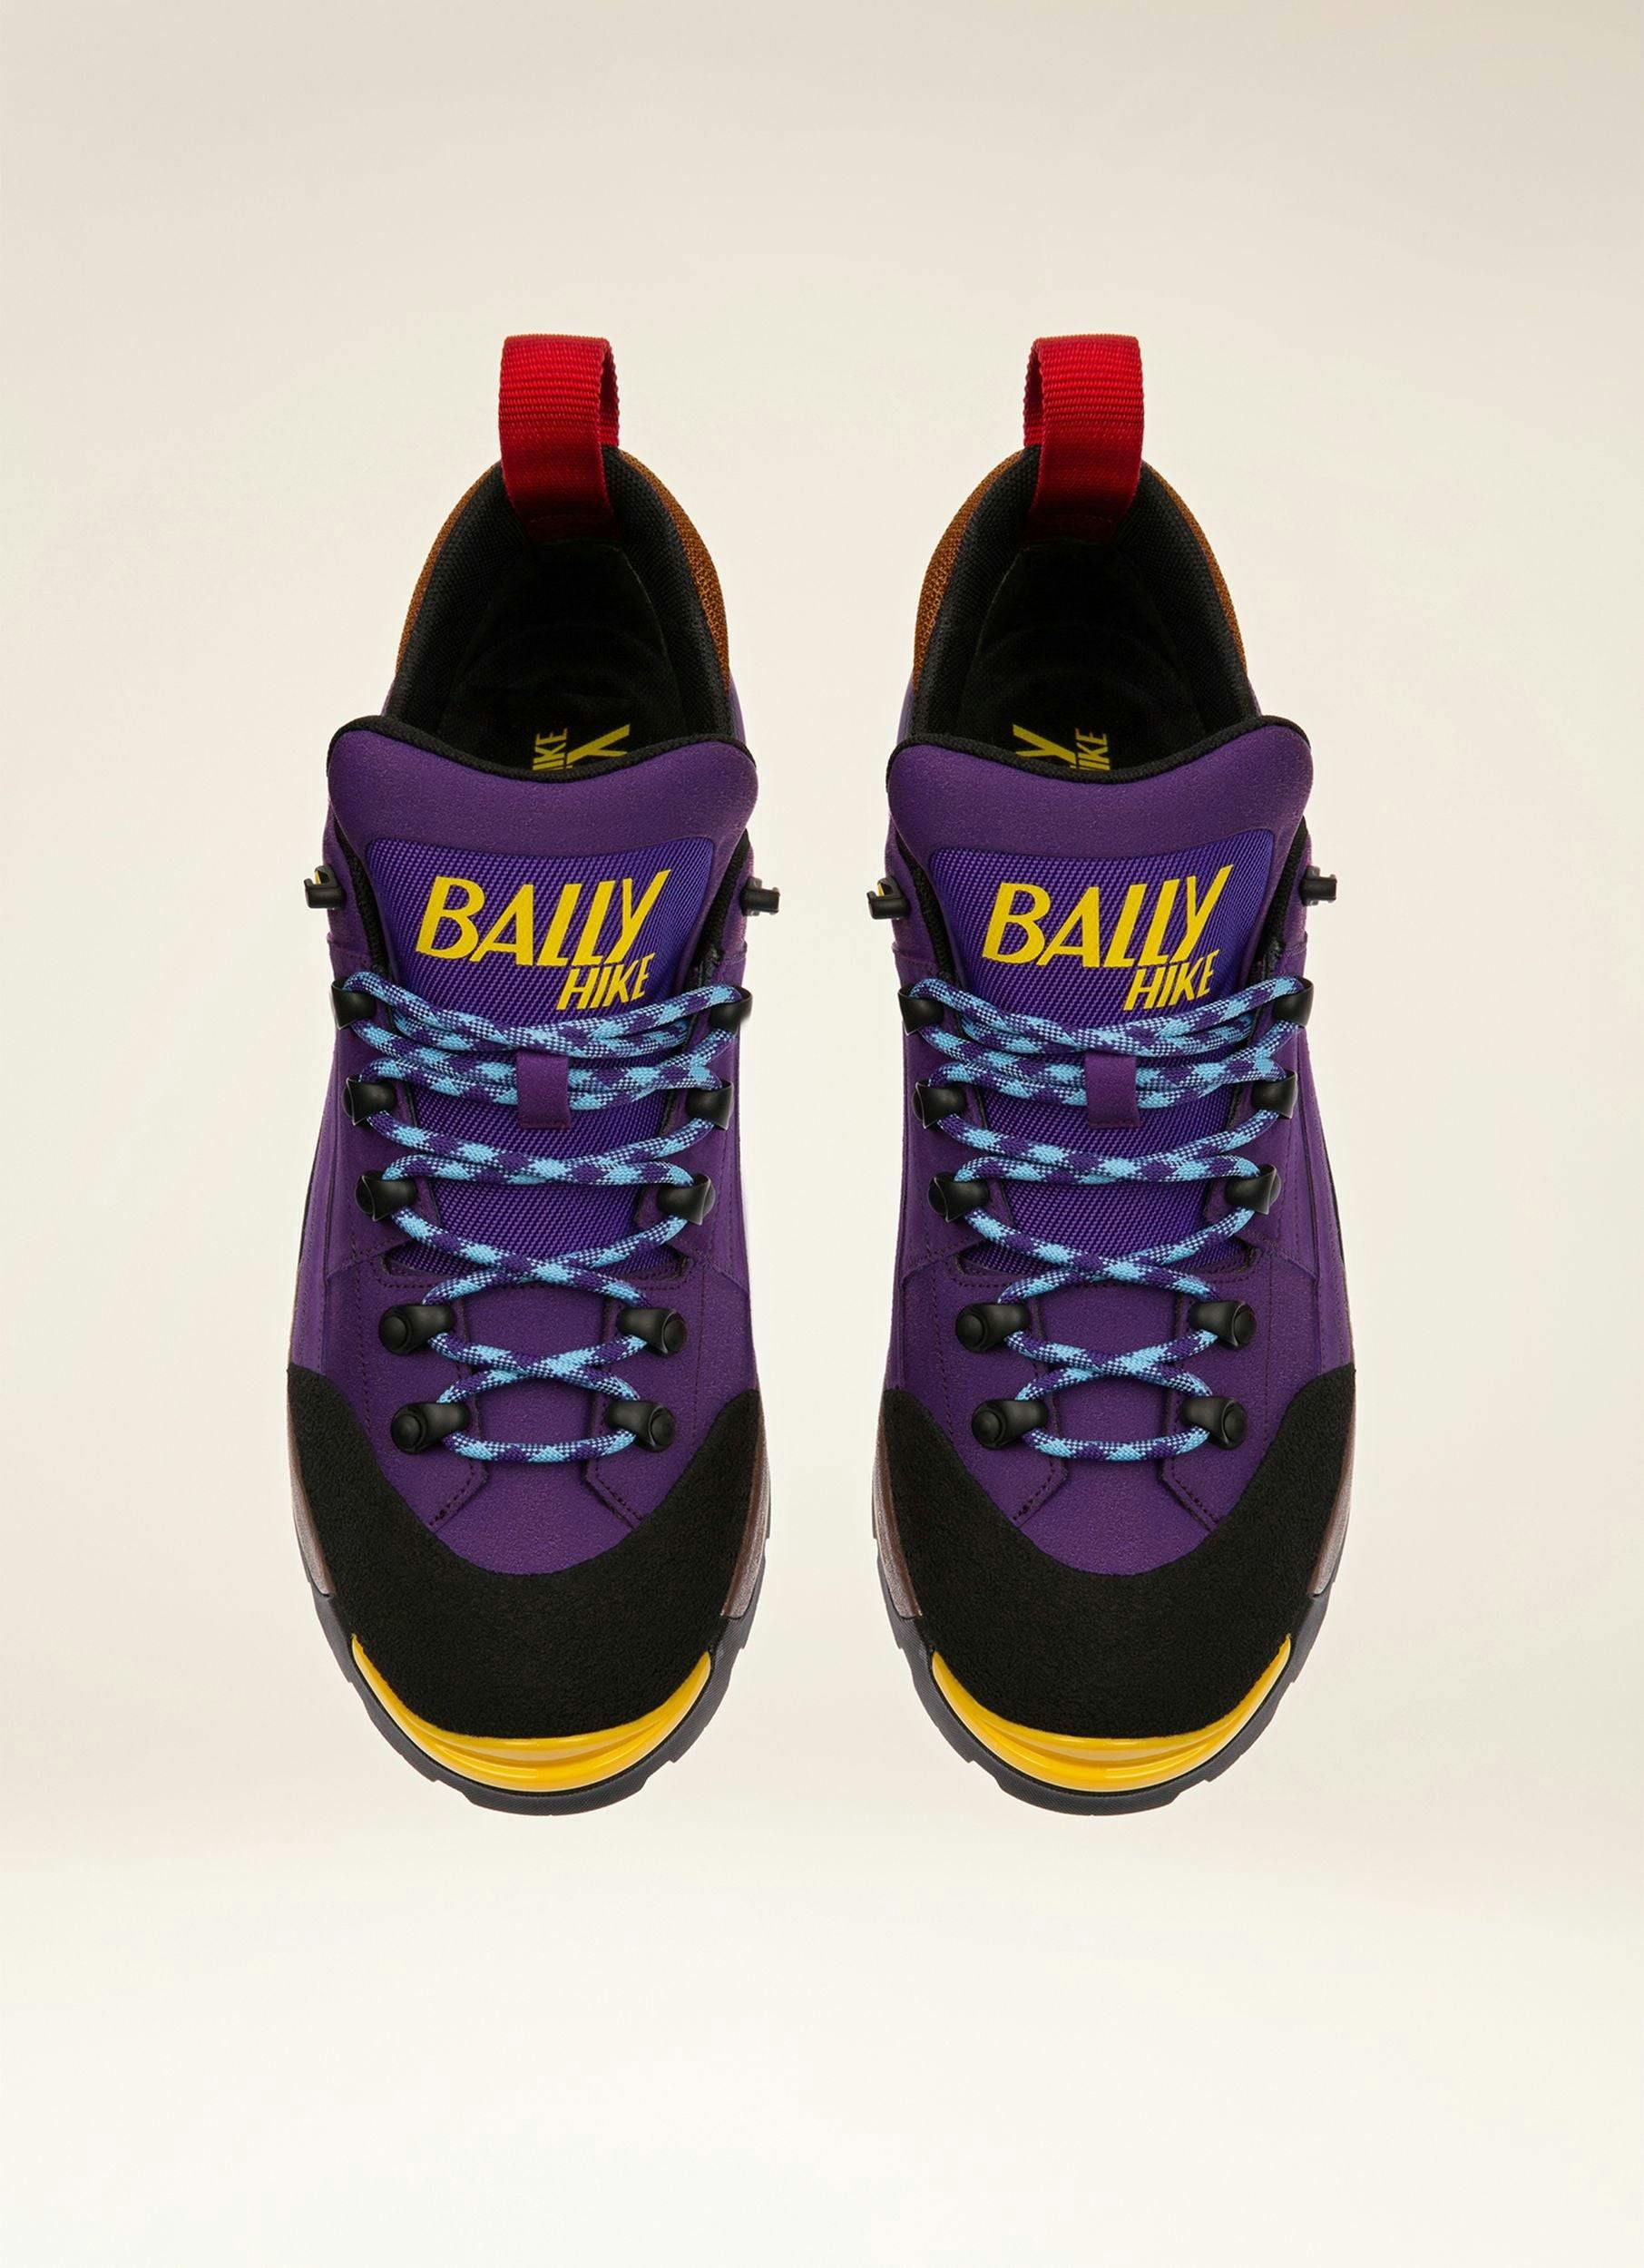 BALLY HIKE Suede Hiking Shoes In Purple - Women's - Bally - 04